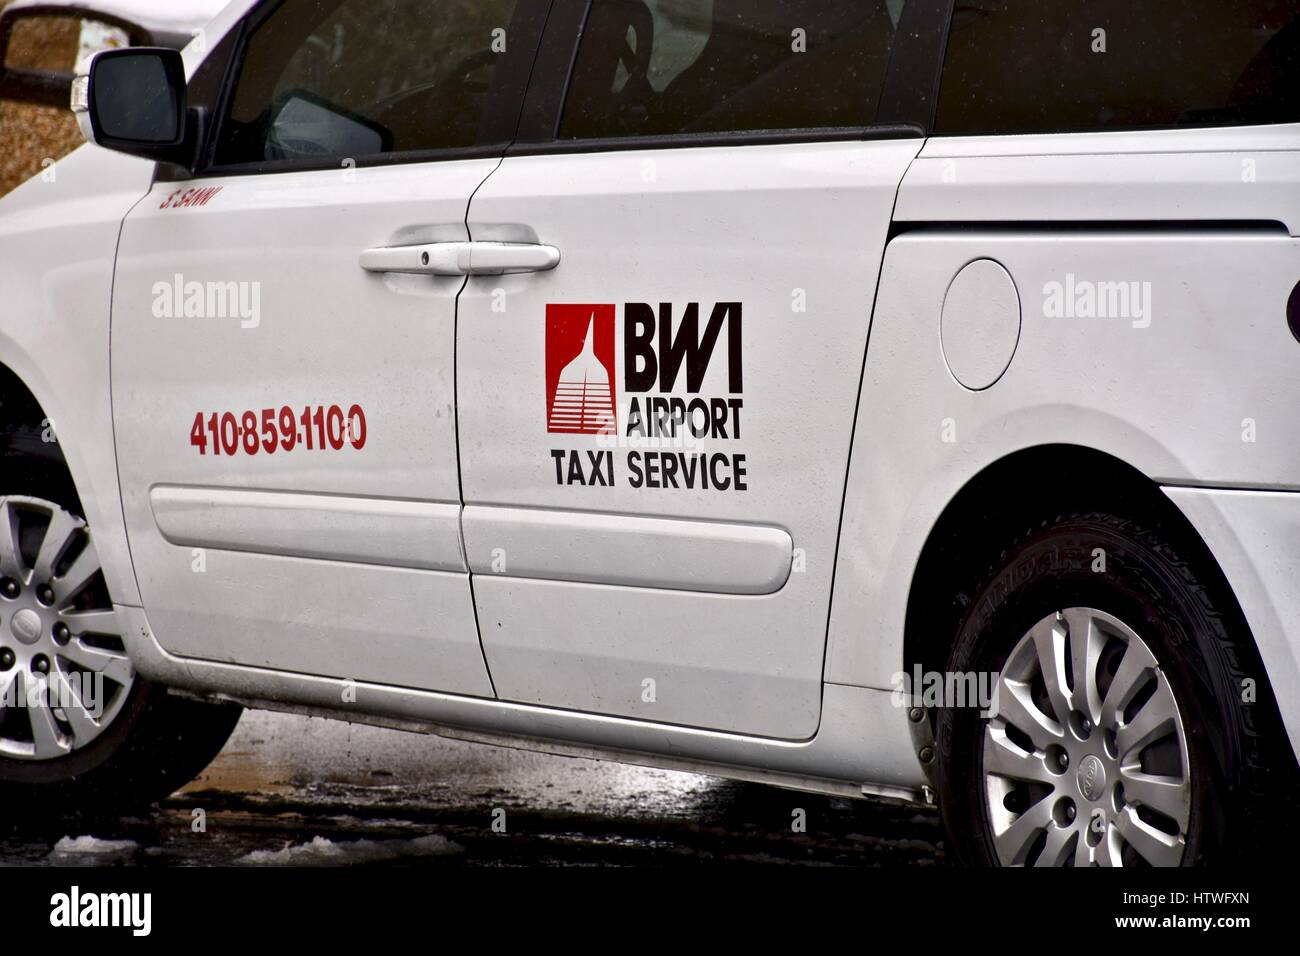 BWI Flughafen Taxi Service van Stockfoto